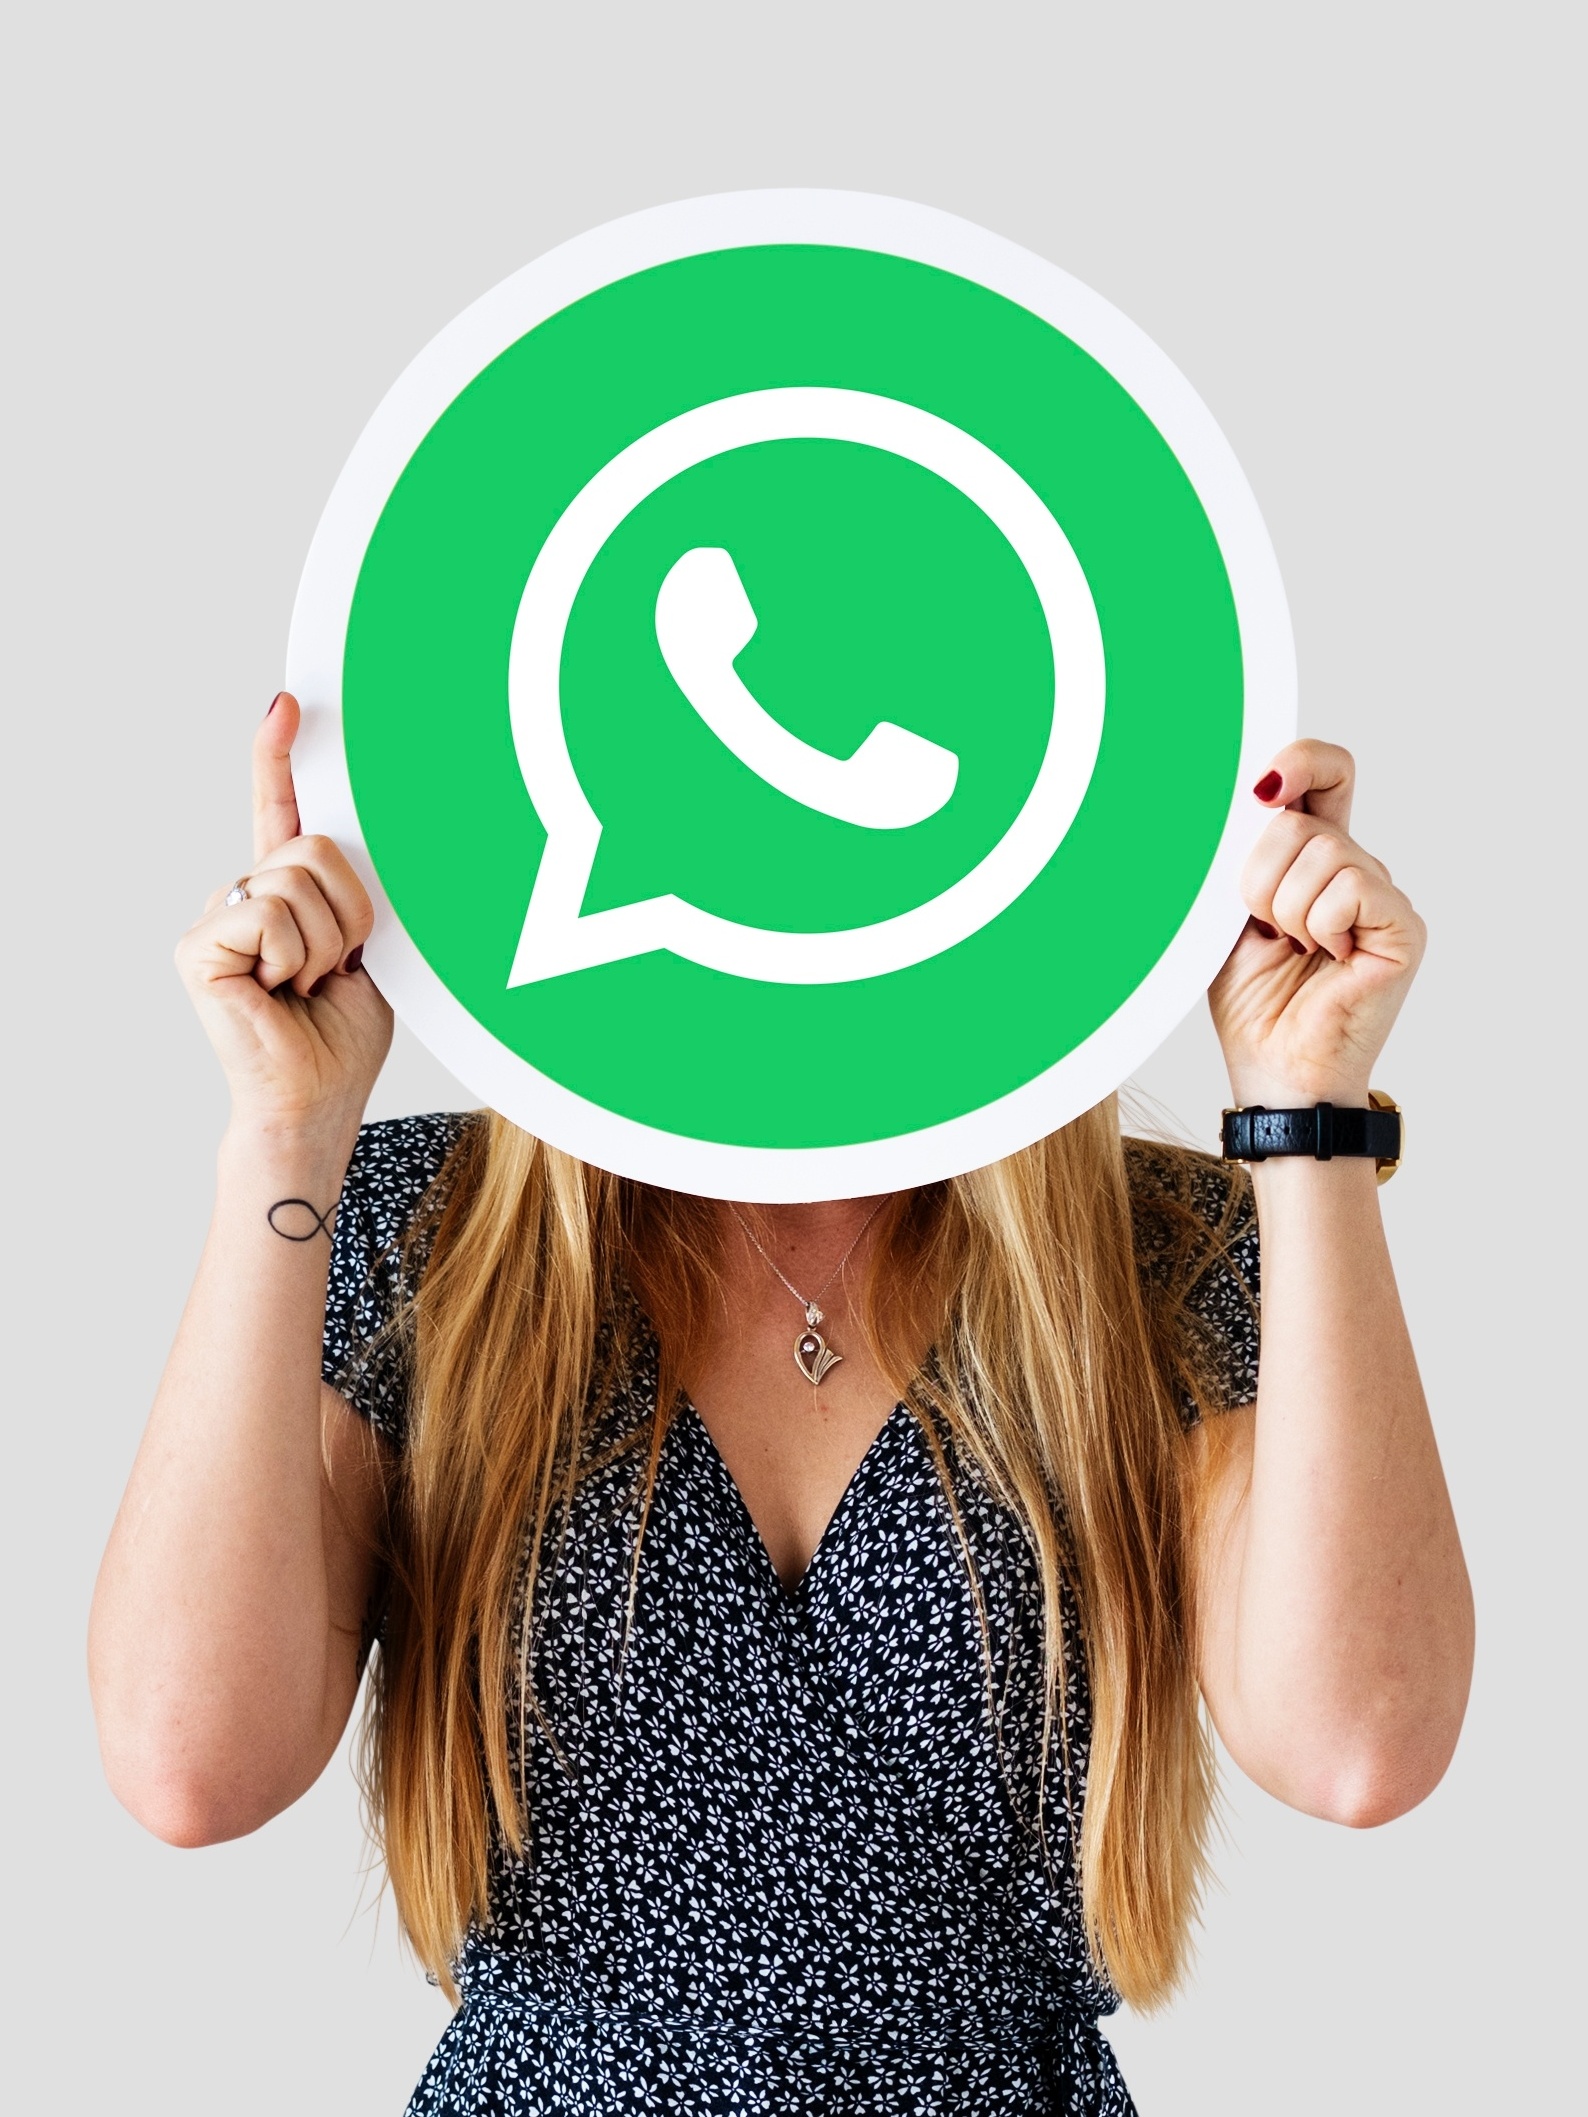 WhatsApp parou? Aplicativo enfrenta instabilidade - Olhar Digital